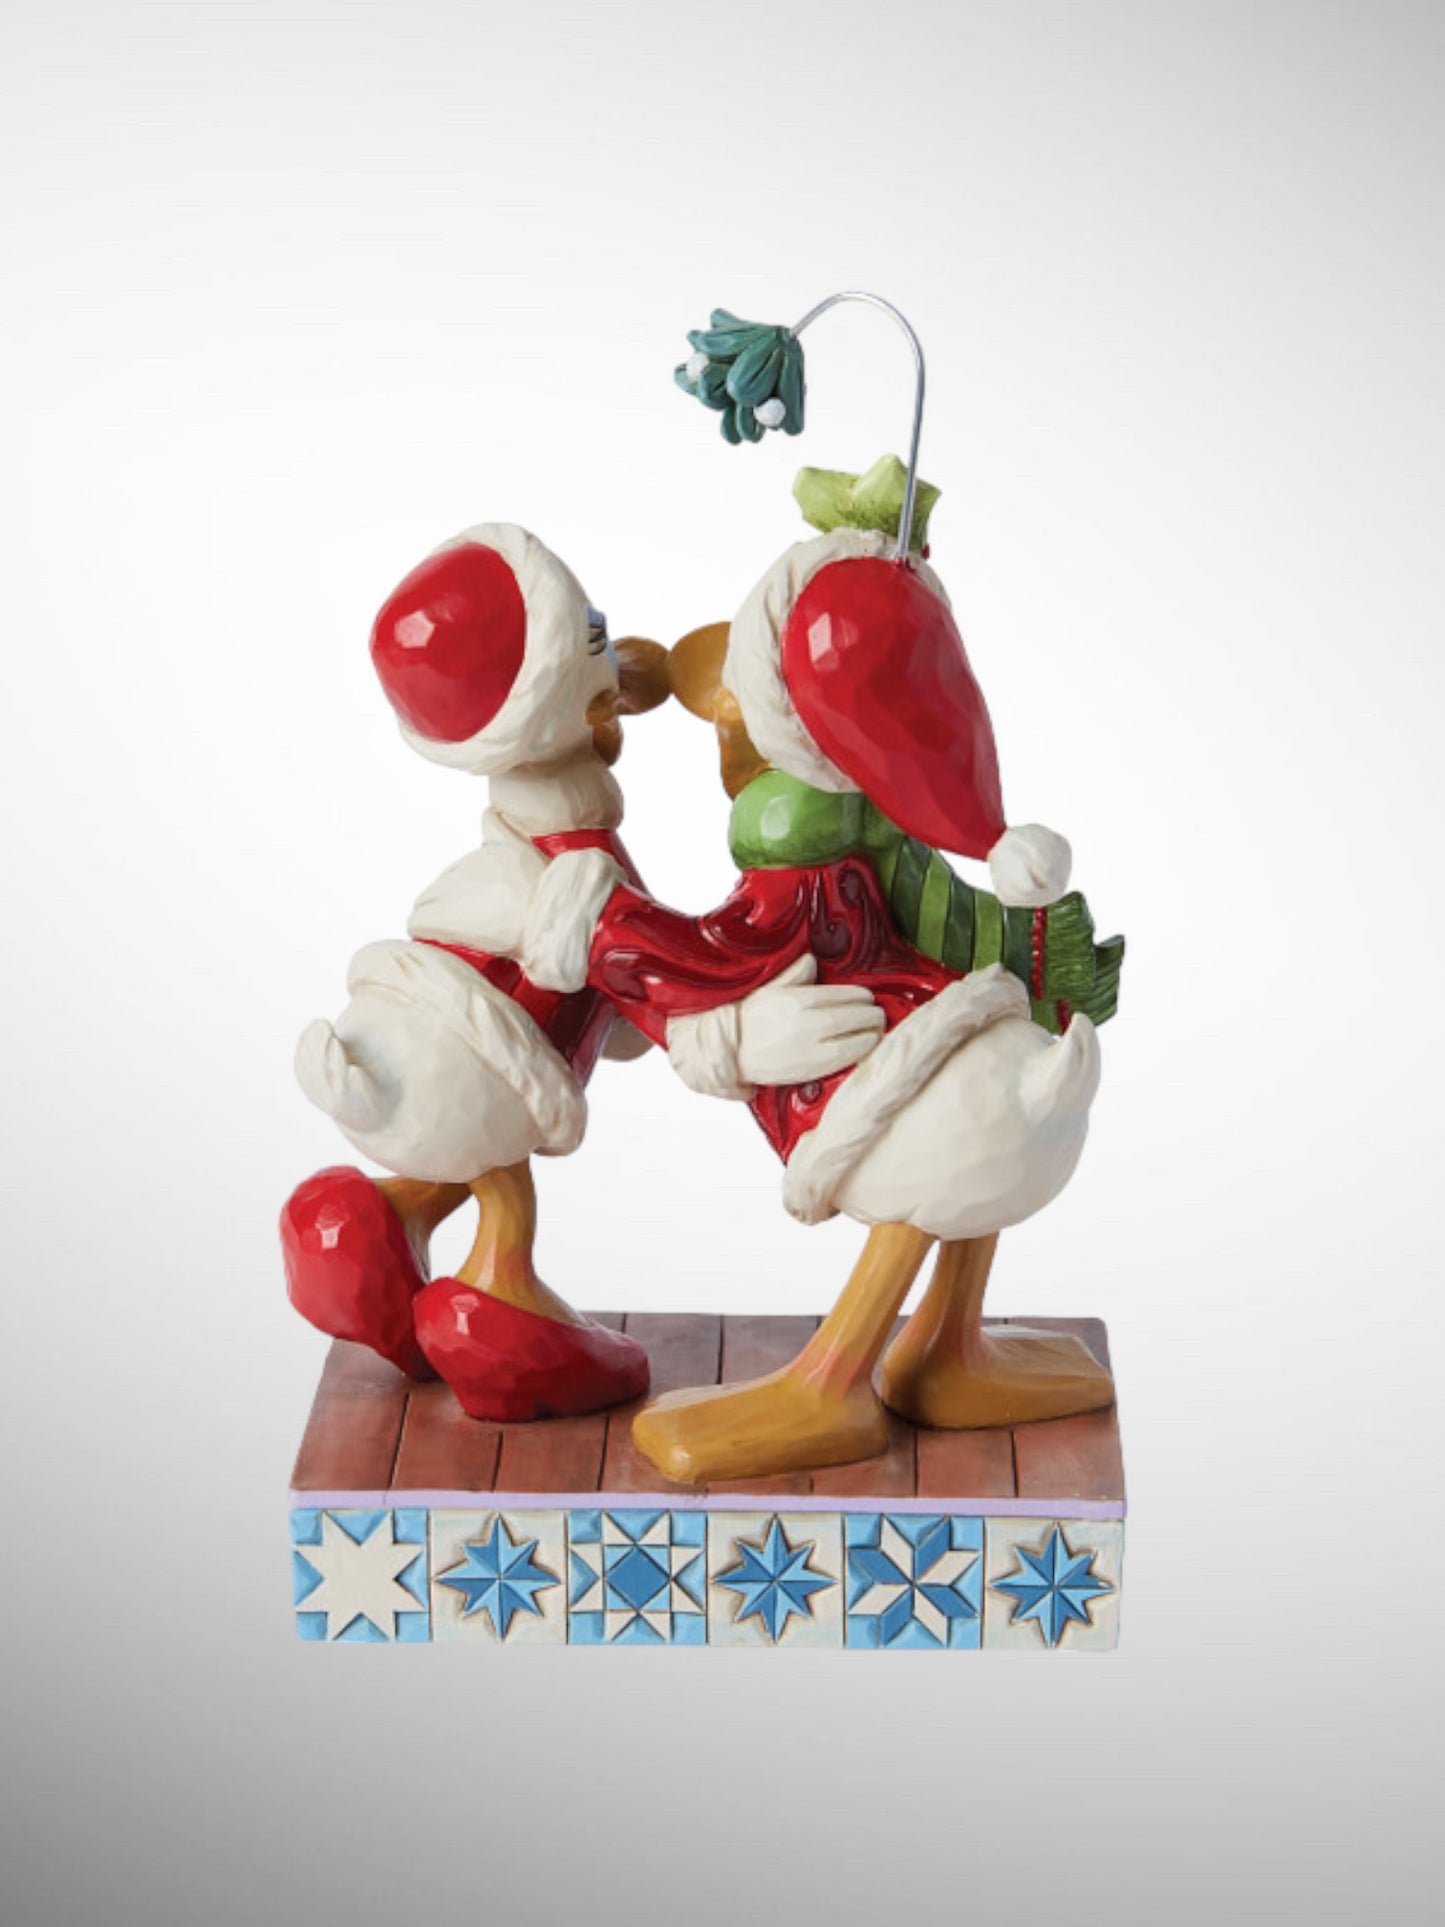 Jim Shore Disney Traditions - Merry Mistletoe Donald and Daisy Duck Christmas Figurine - PREORDER